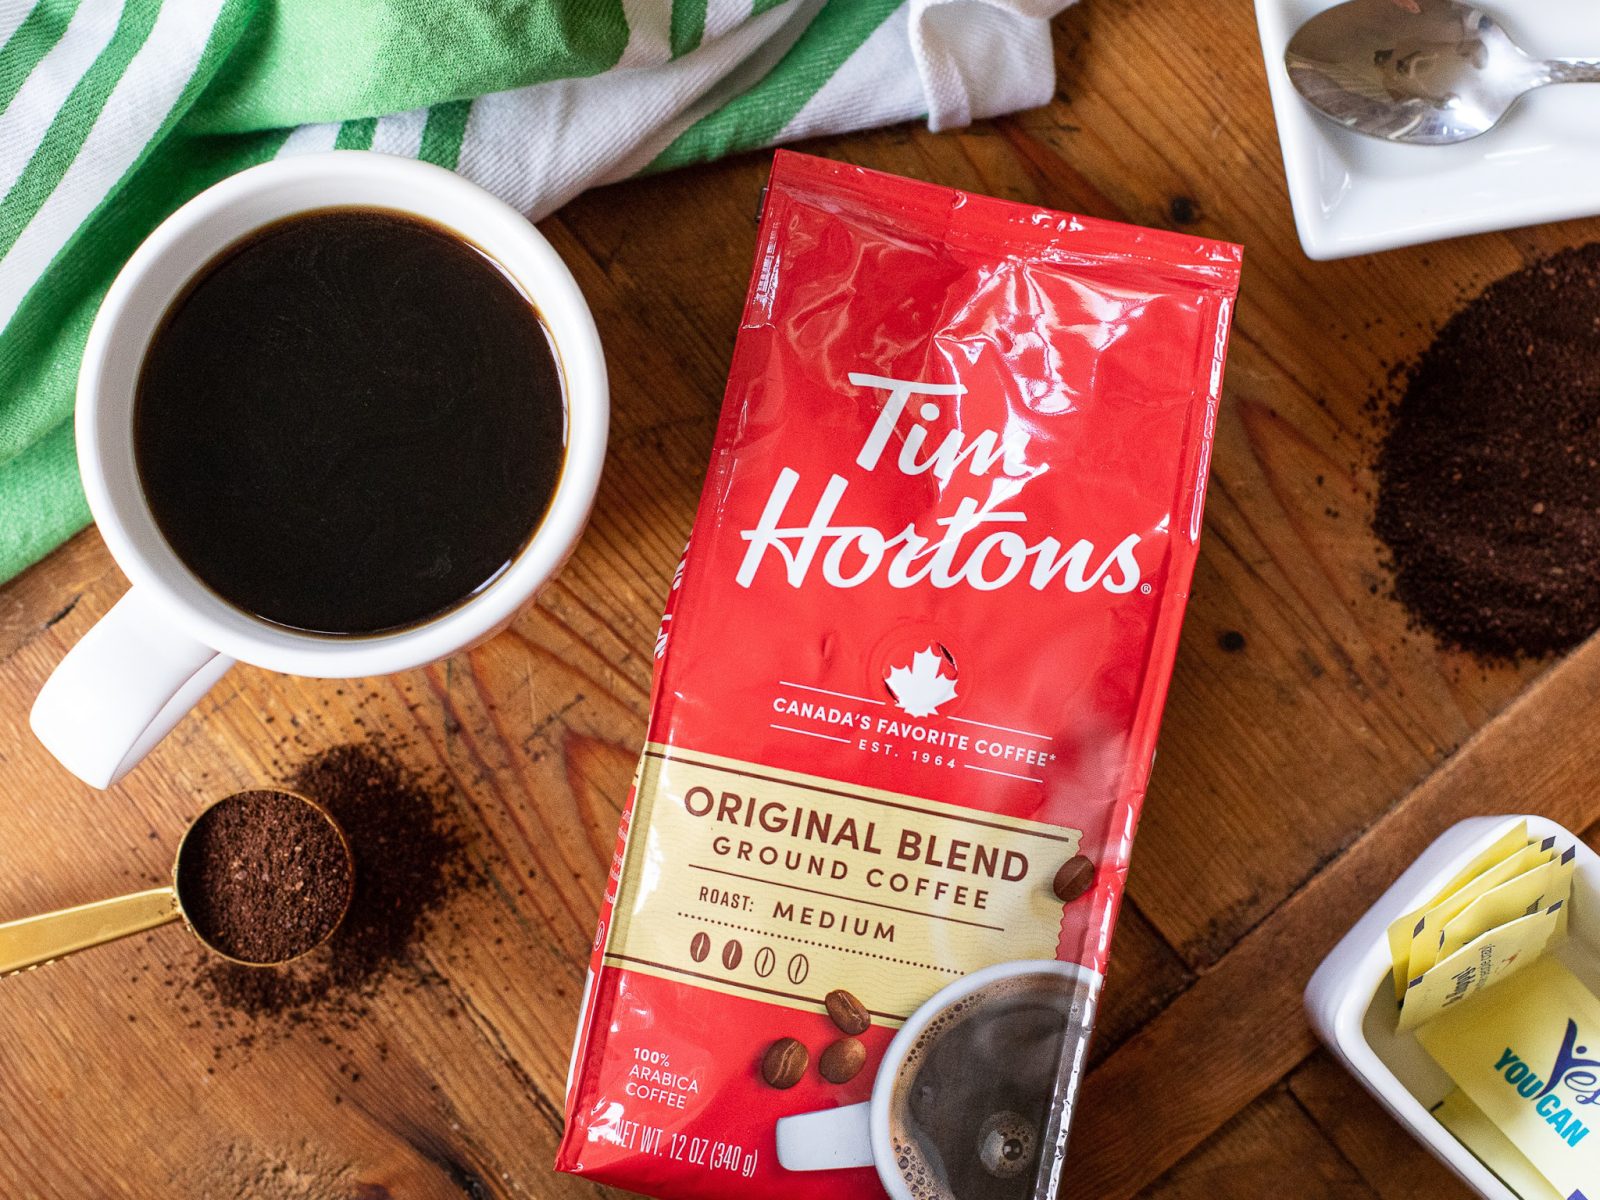 Tim Hortons - Tim Hortons, Coffee, Ground, Medium Roast, Original Blend (12  oz), Shop